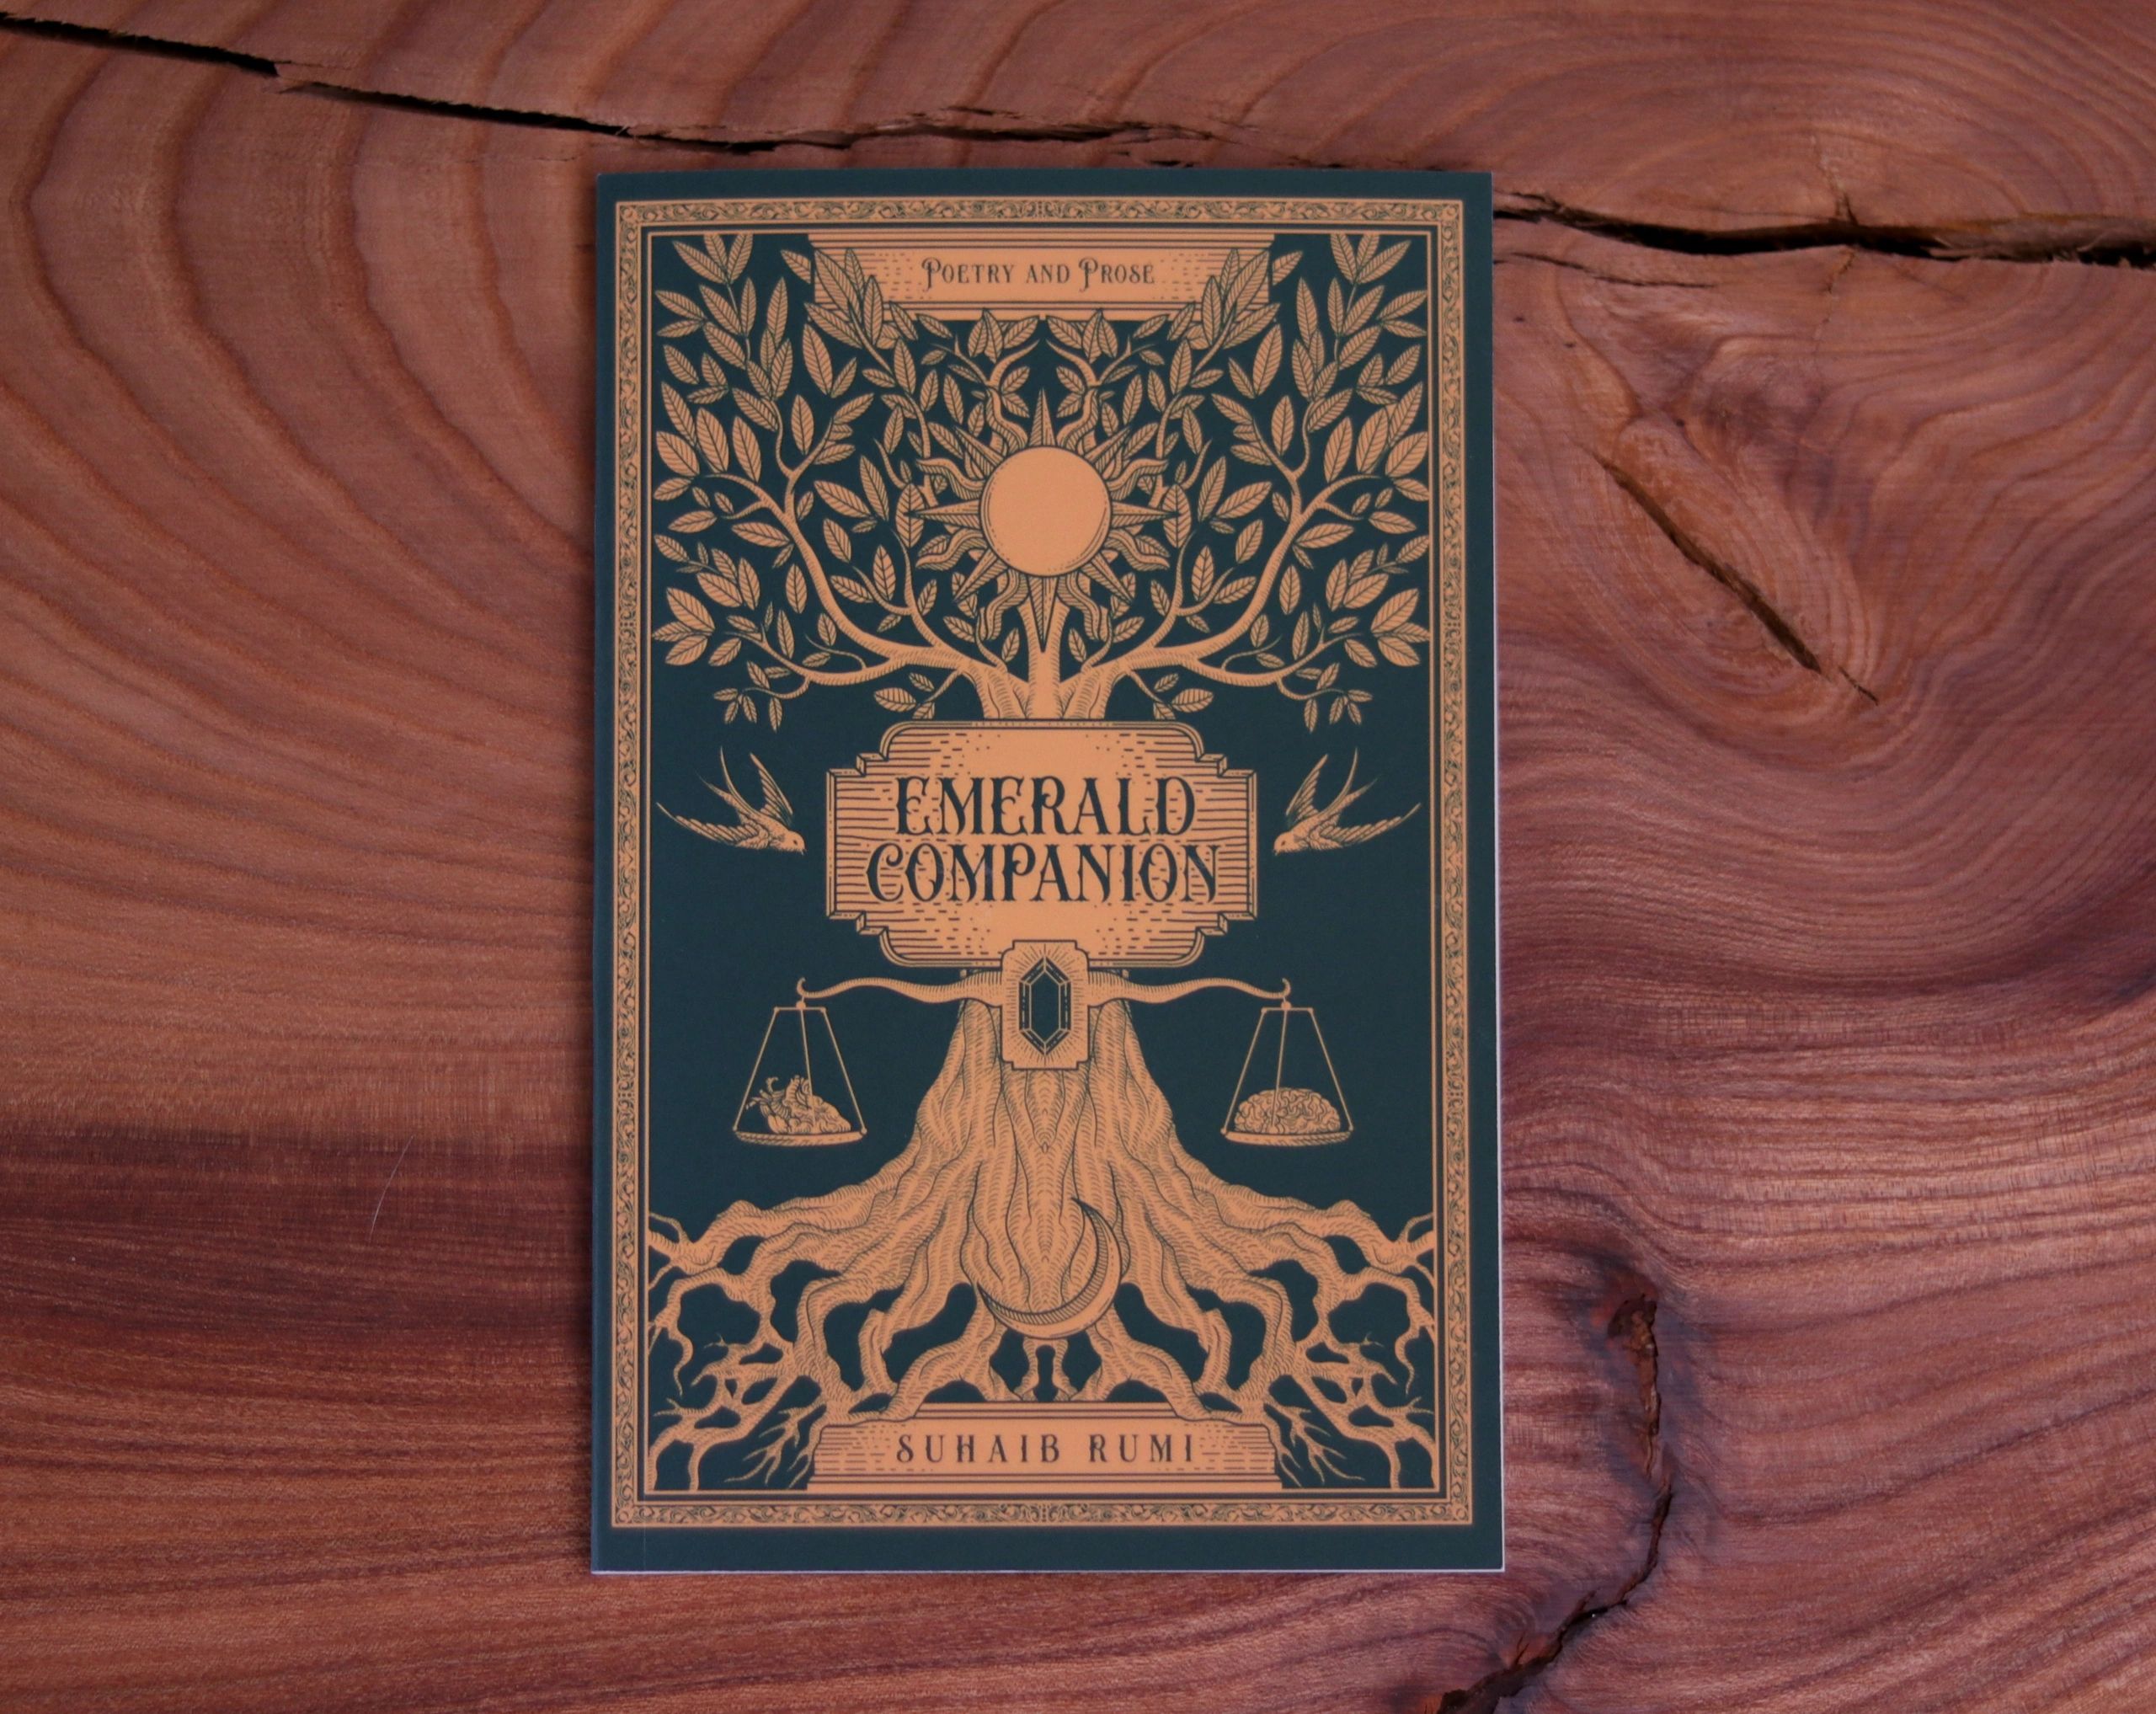 Emerald Companion by Suhaib Rumi